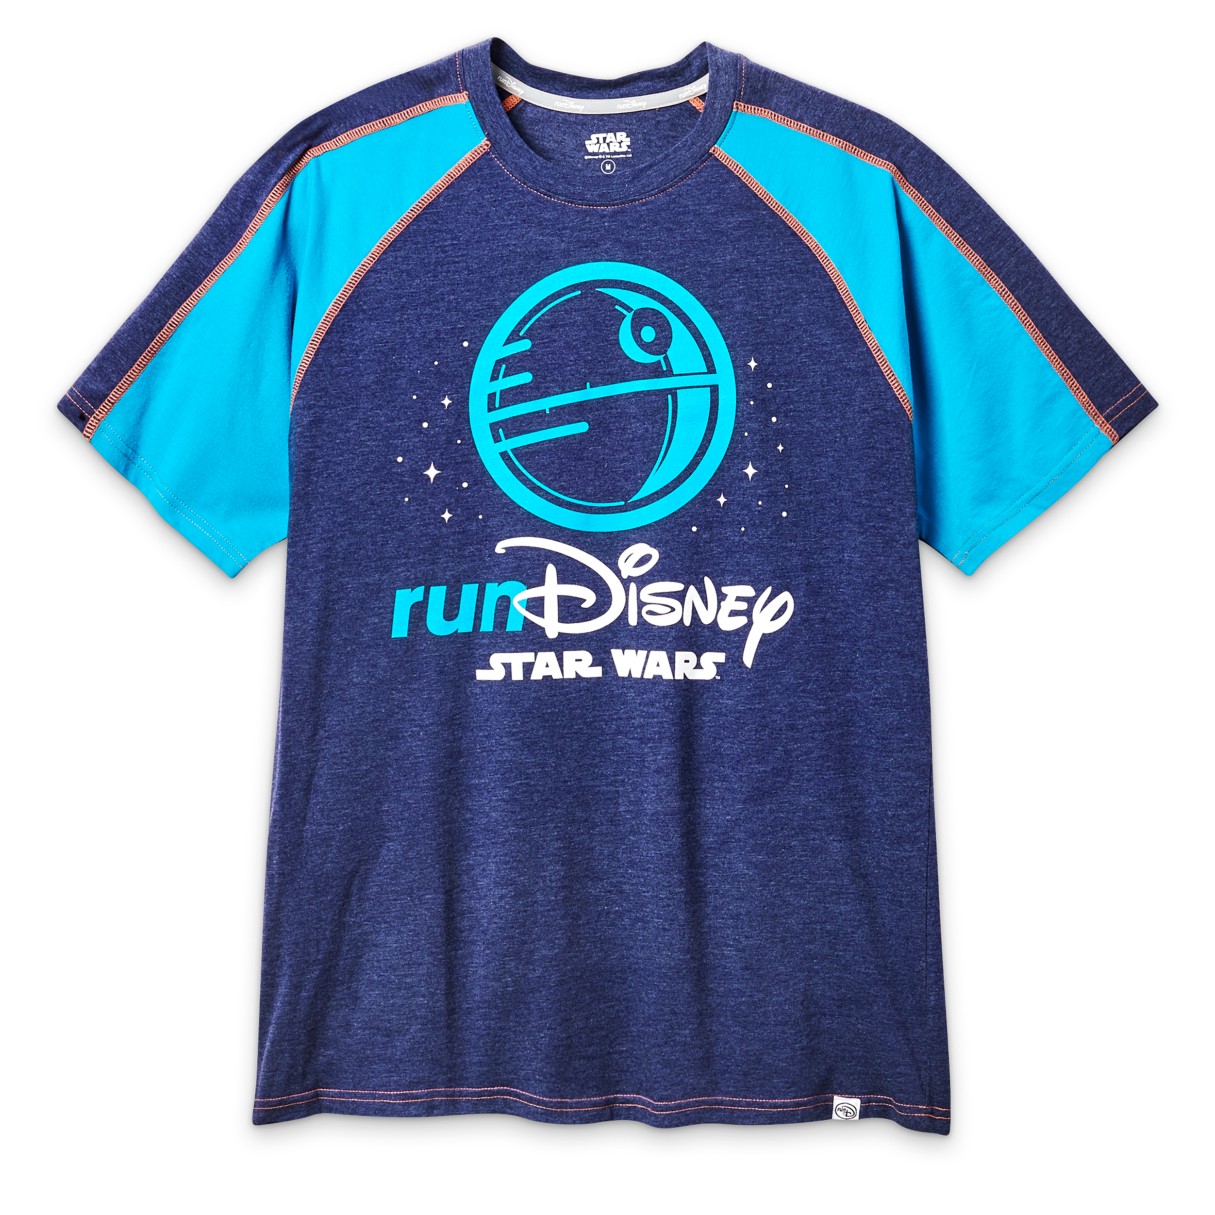 Death Star runDisney T-Shirt for Men – Star Wars